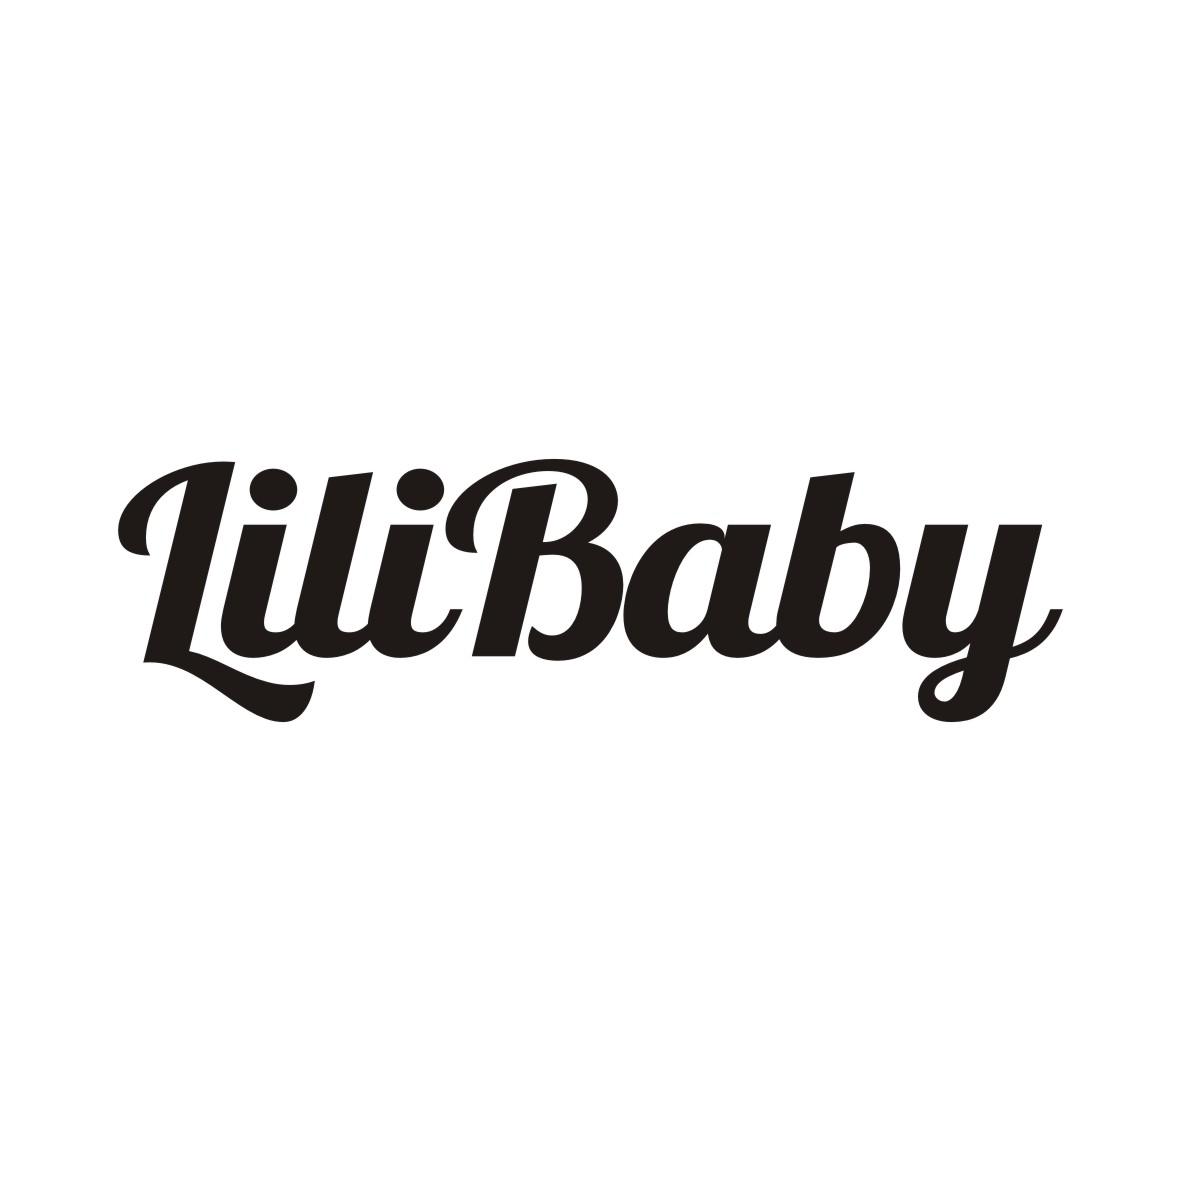 28类-健身玩具LILIBABY商标转让